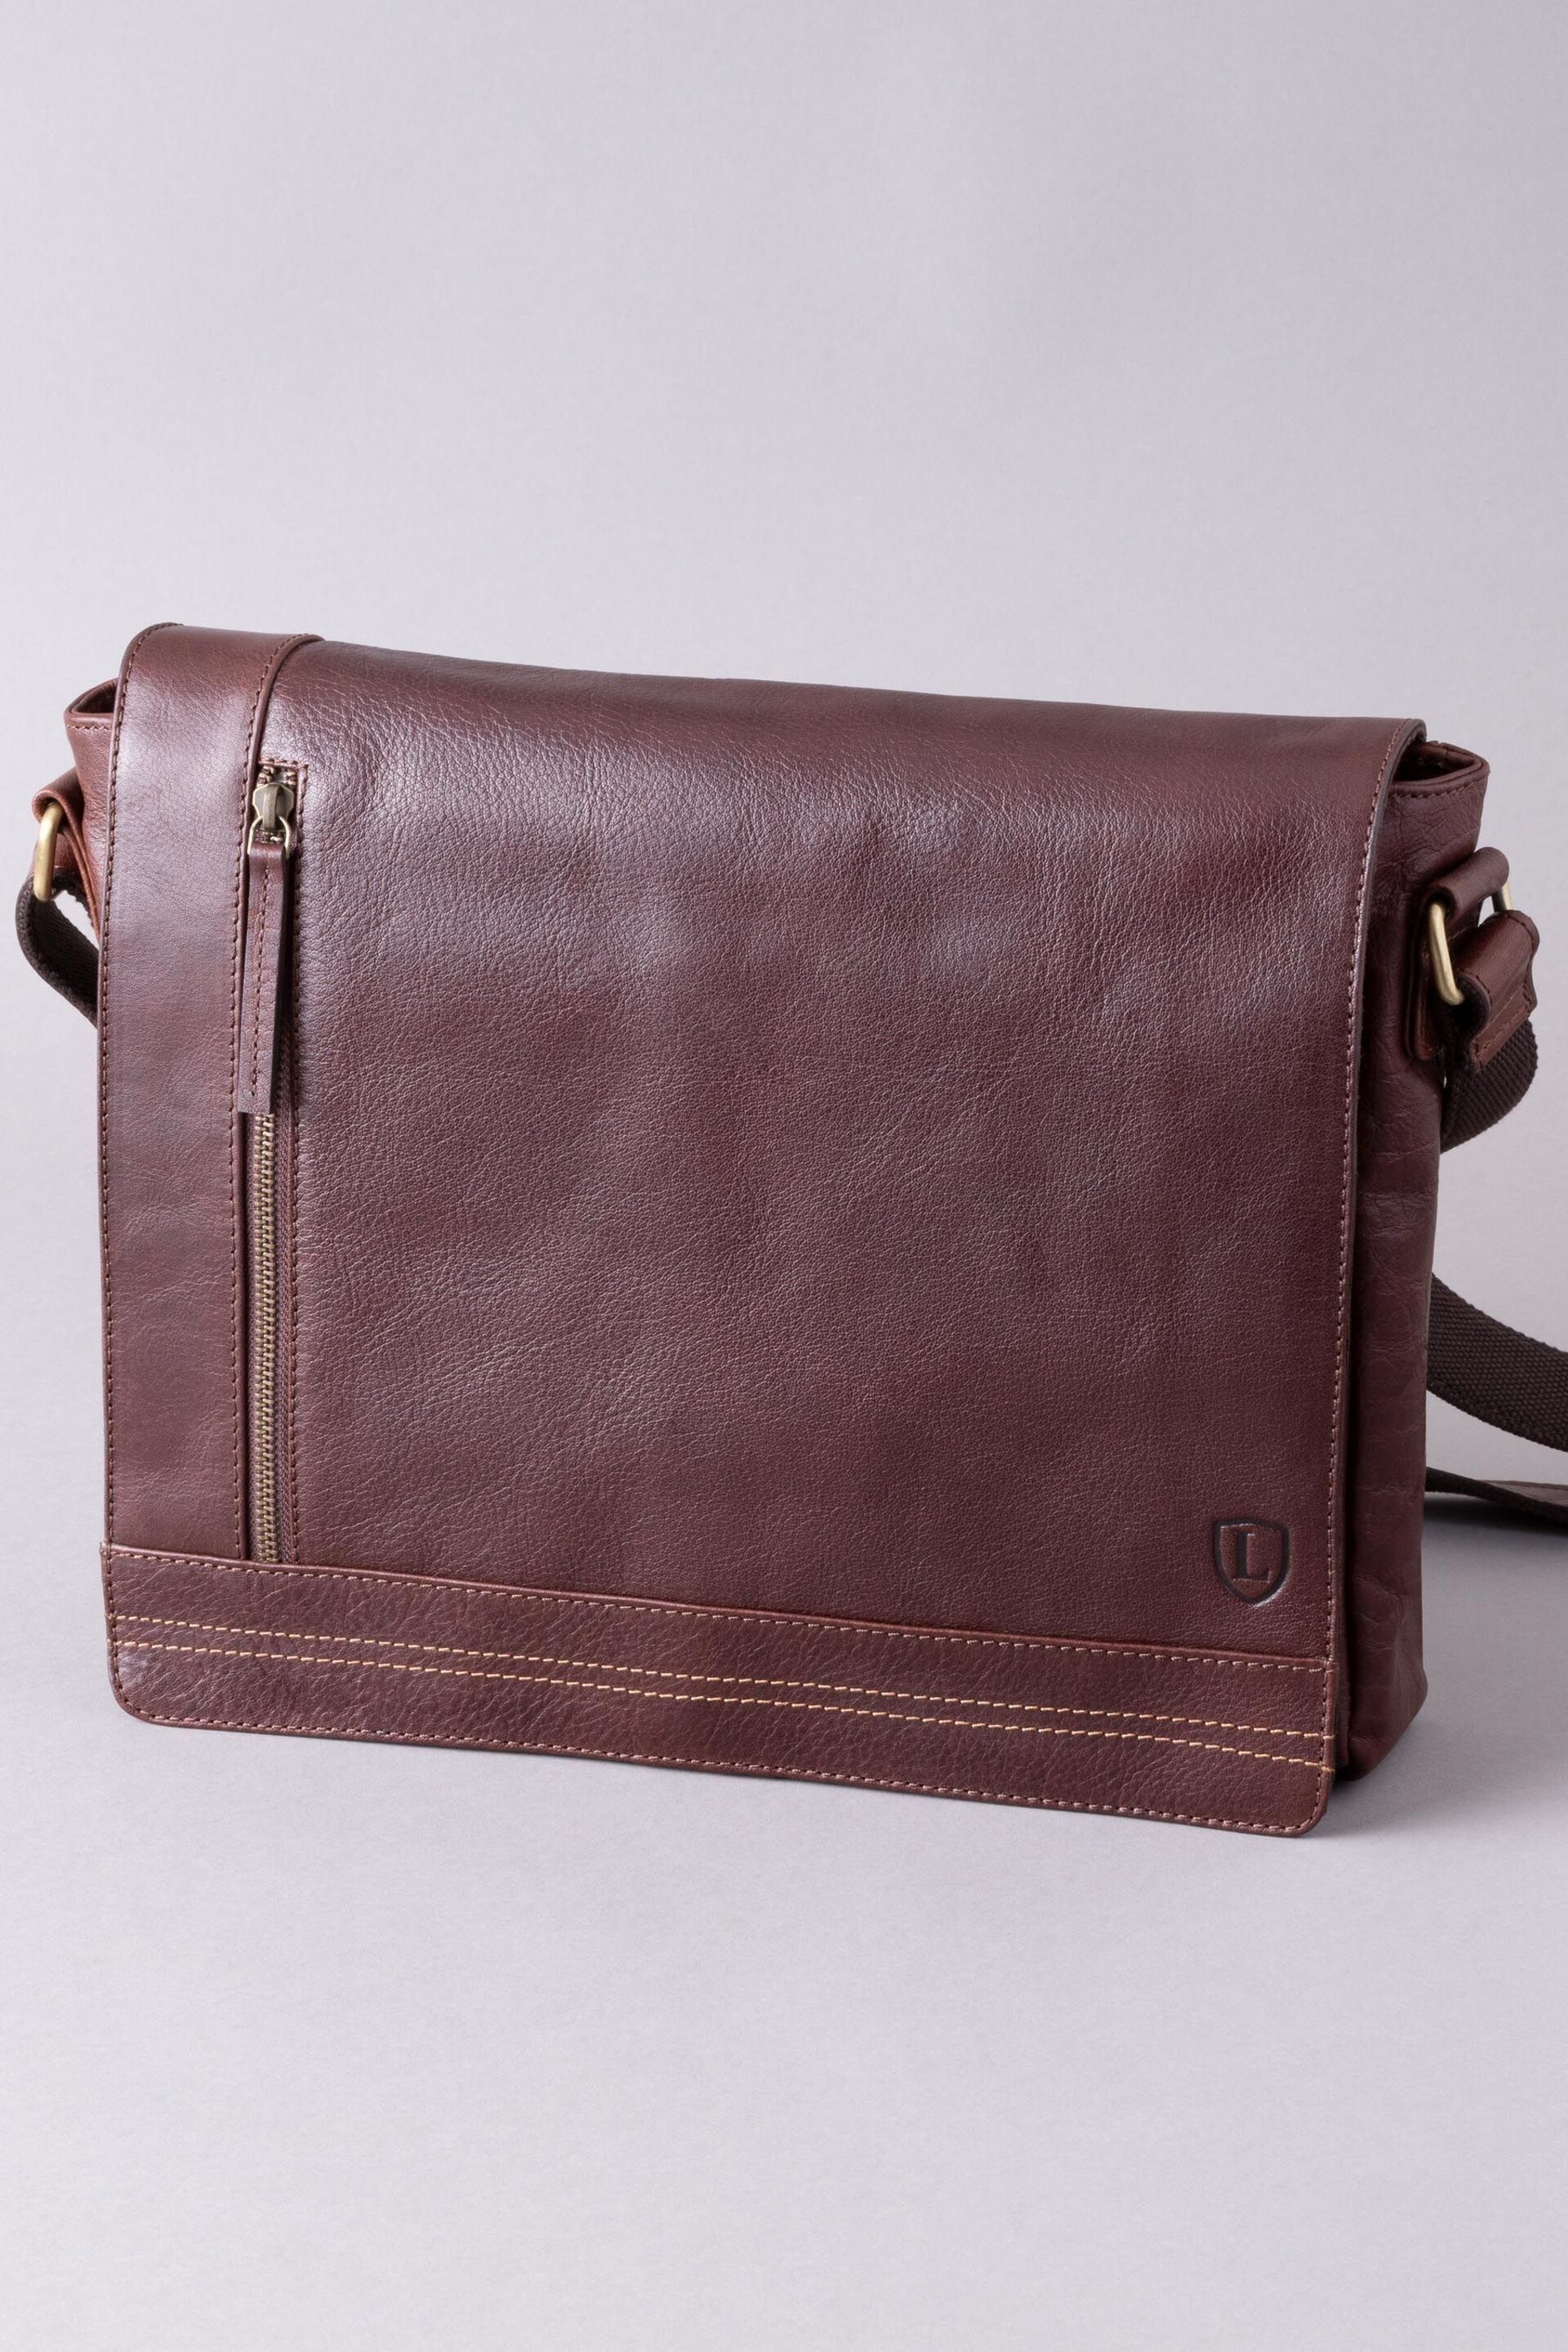 Lakeland Leather Brown Large Keswick Leather Messenger Bag - Image 1 of 4